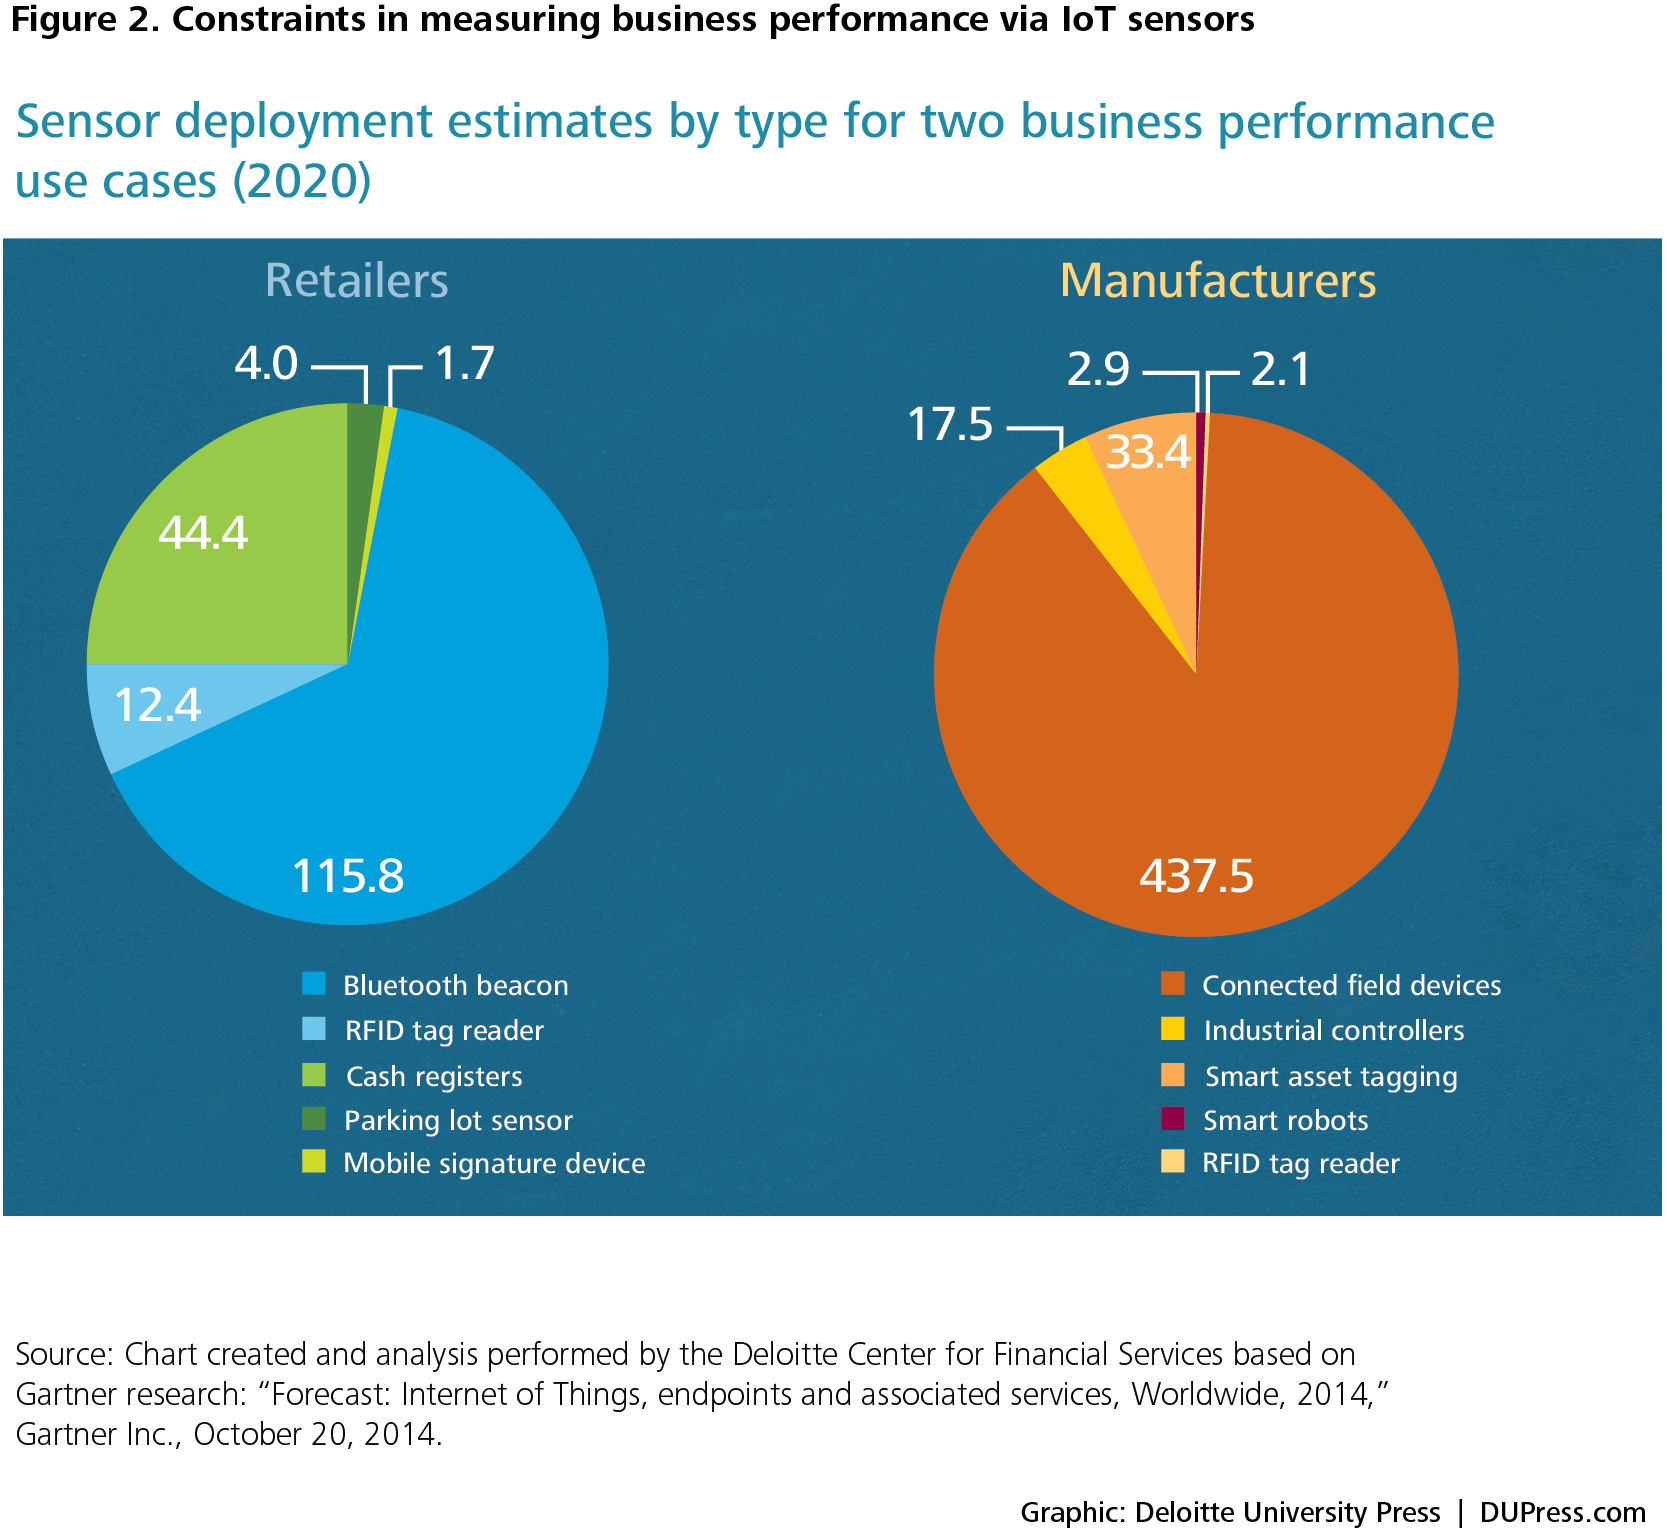 DUP_1166_Figure 2. Constraints in measuring business performance via IoT sensors